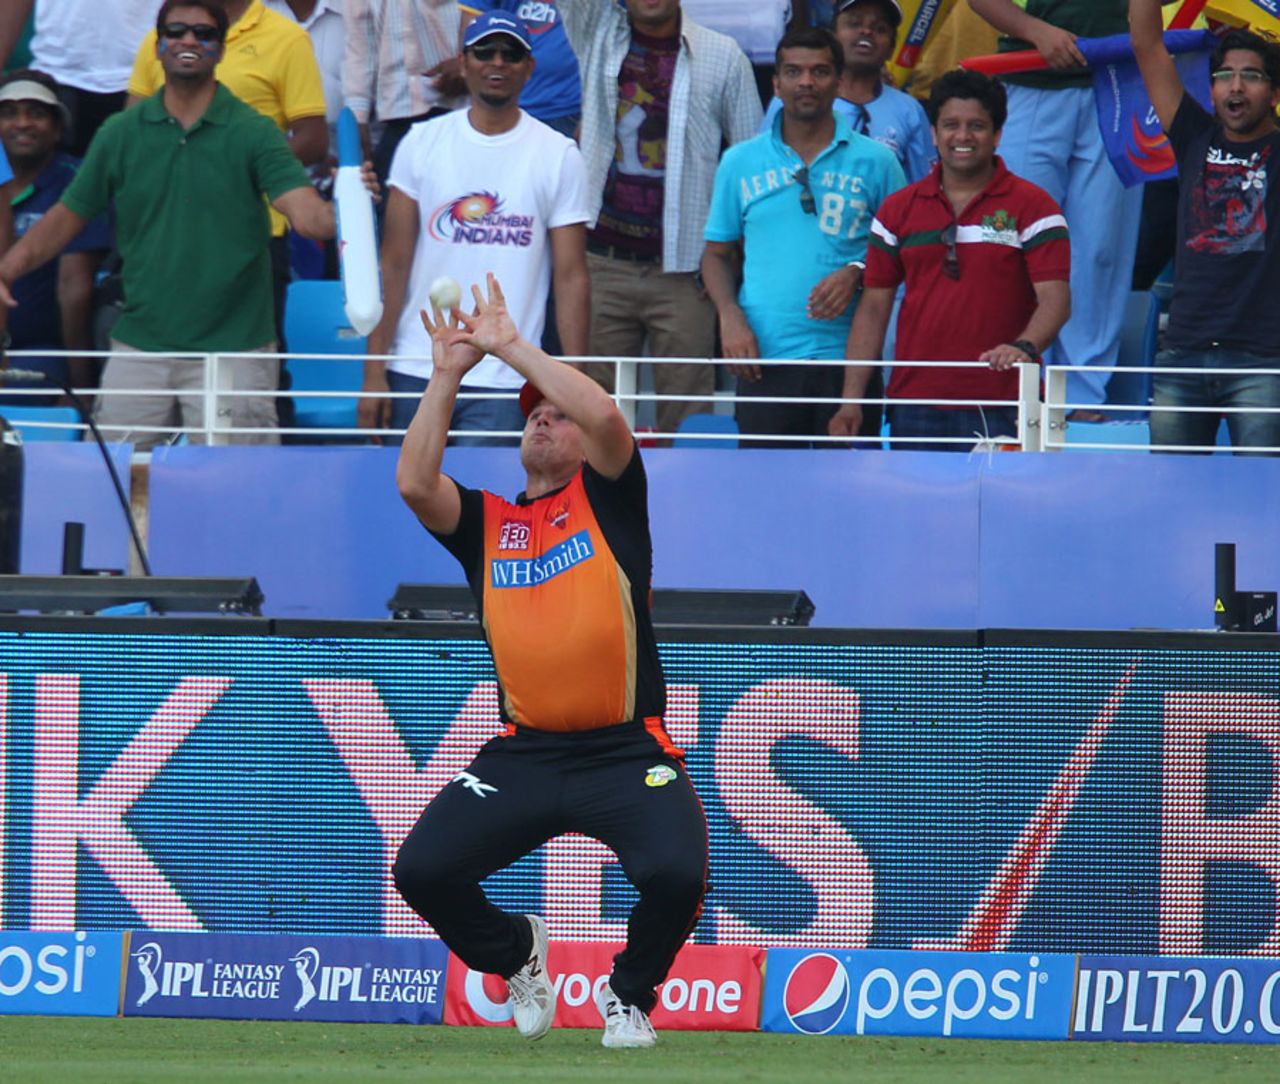 Aaron Finch takes the catch to dismiss Quinton de Kock, Sunrisers Hyderabad v Delhi Daredevils, IPL 2014, Dubai, April 25, 2014